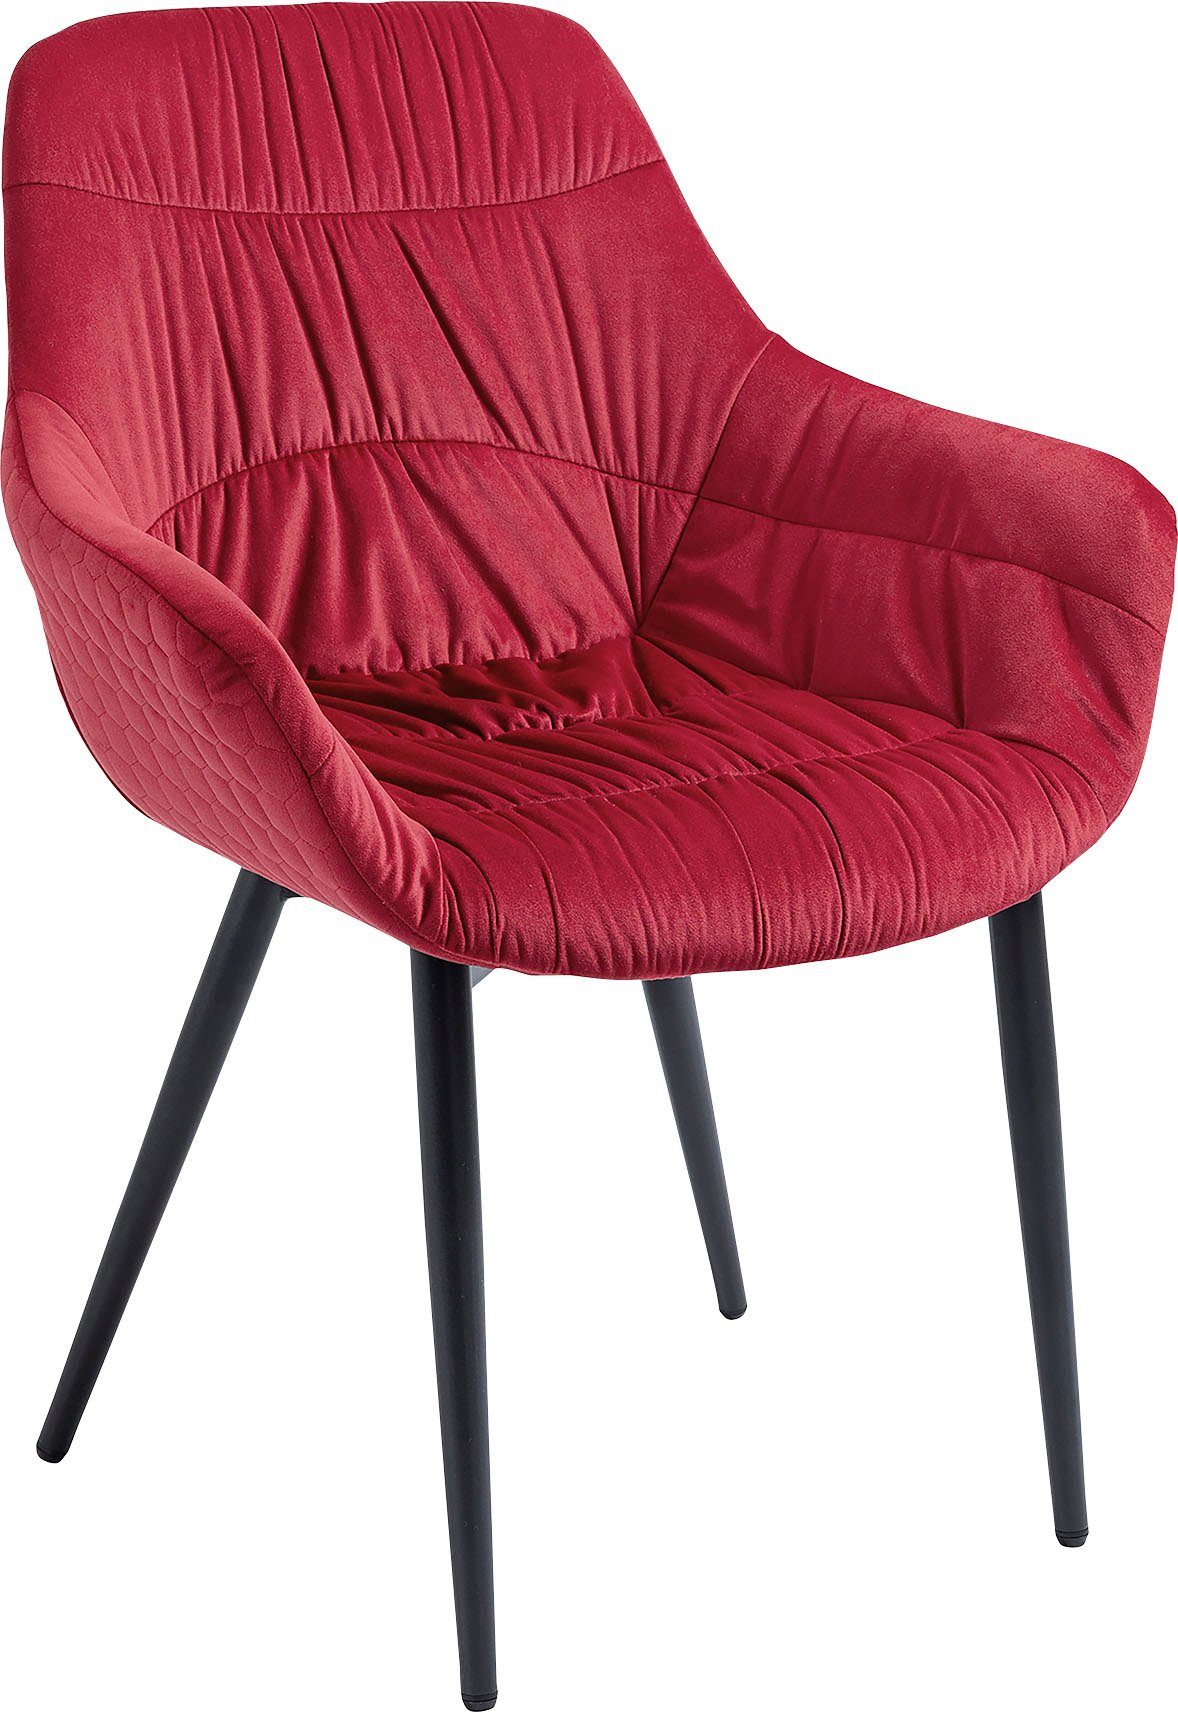 SalesFever Armlehnstuhl, 2-fach gesteppt Rot/Schwarz | Stühle